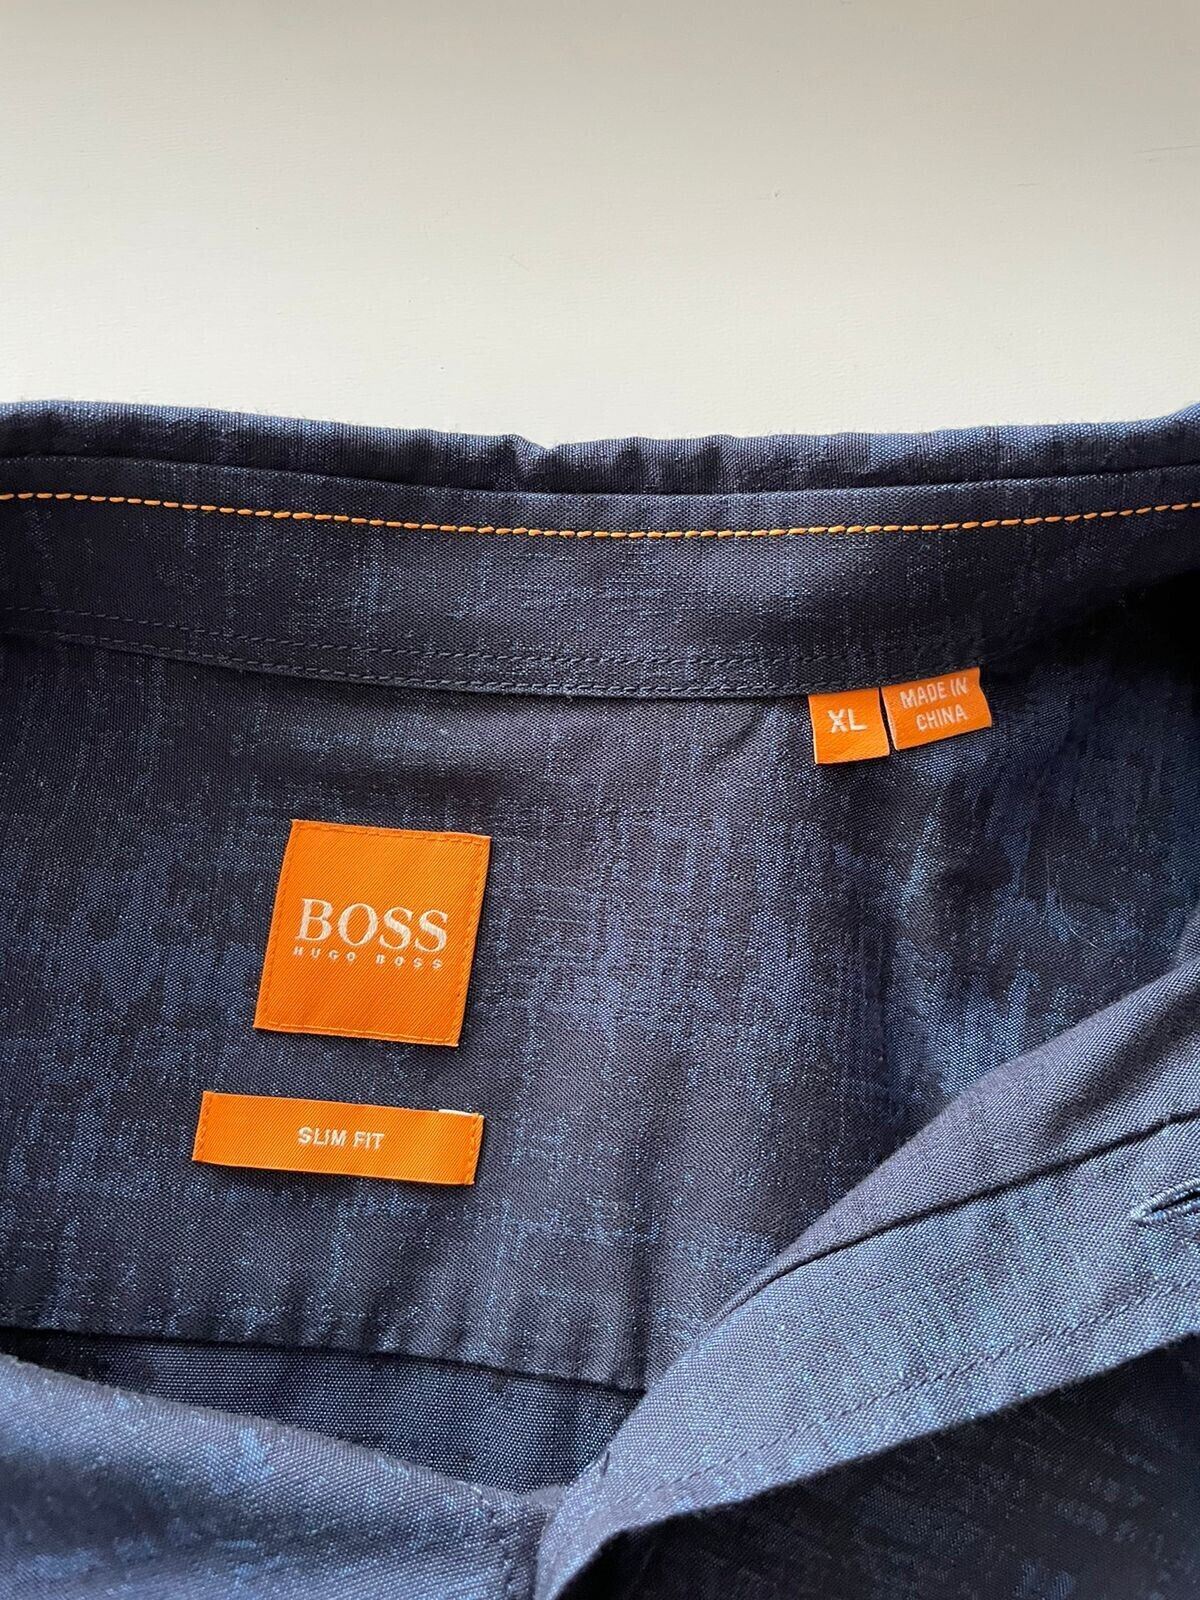 Hugo Boss Orange Men's Slim Fit Button-down Dress Shirt XL